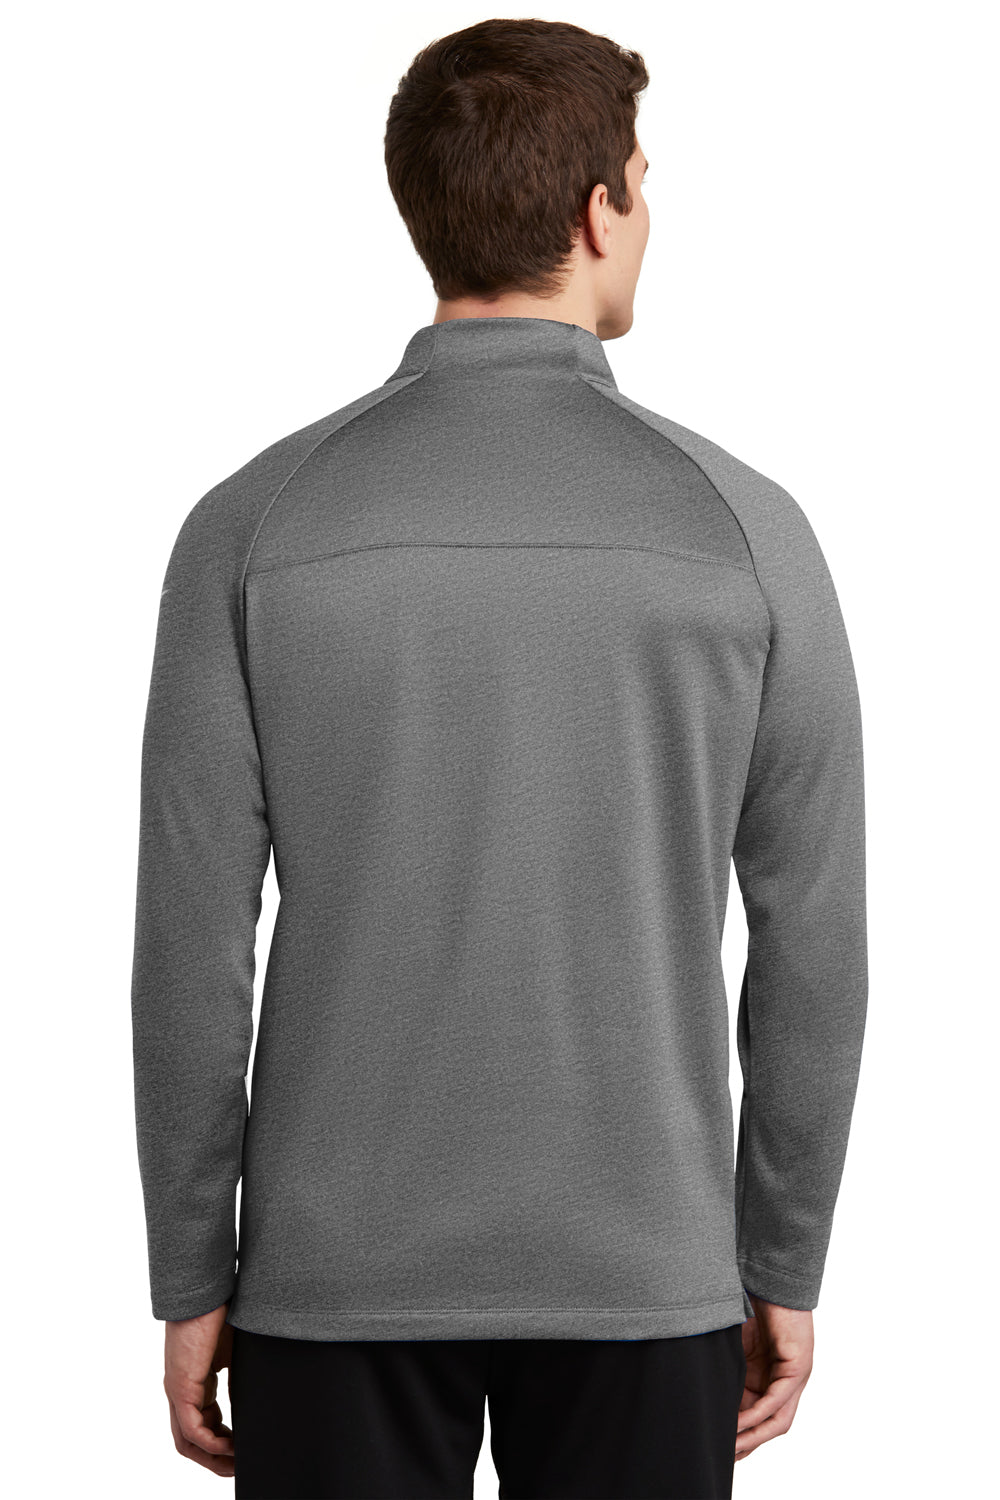 Nike NKAH6254 Mens Therma-Fit Moisture Wicking Fleece 1/4 Zip Sweatshirt Heather Grey Model Back